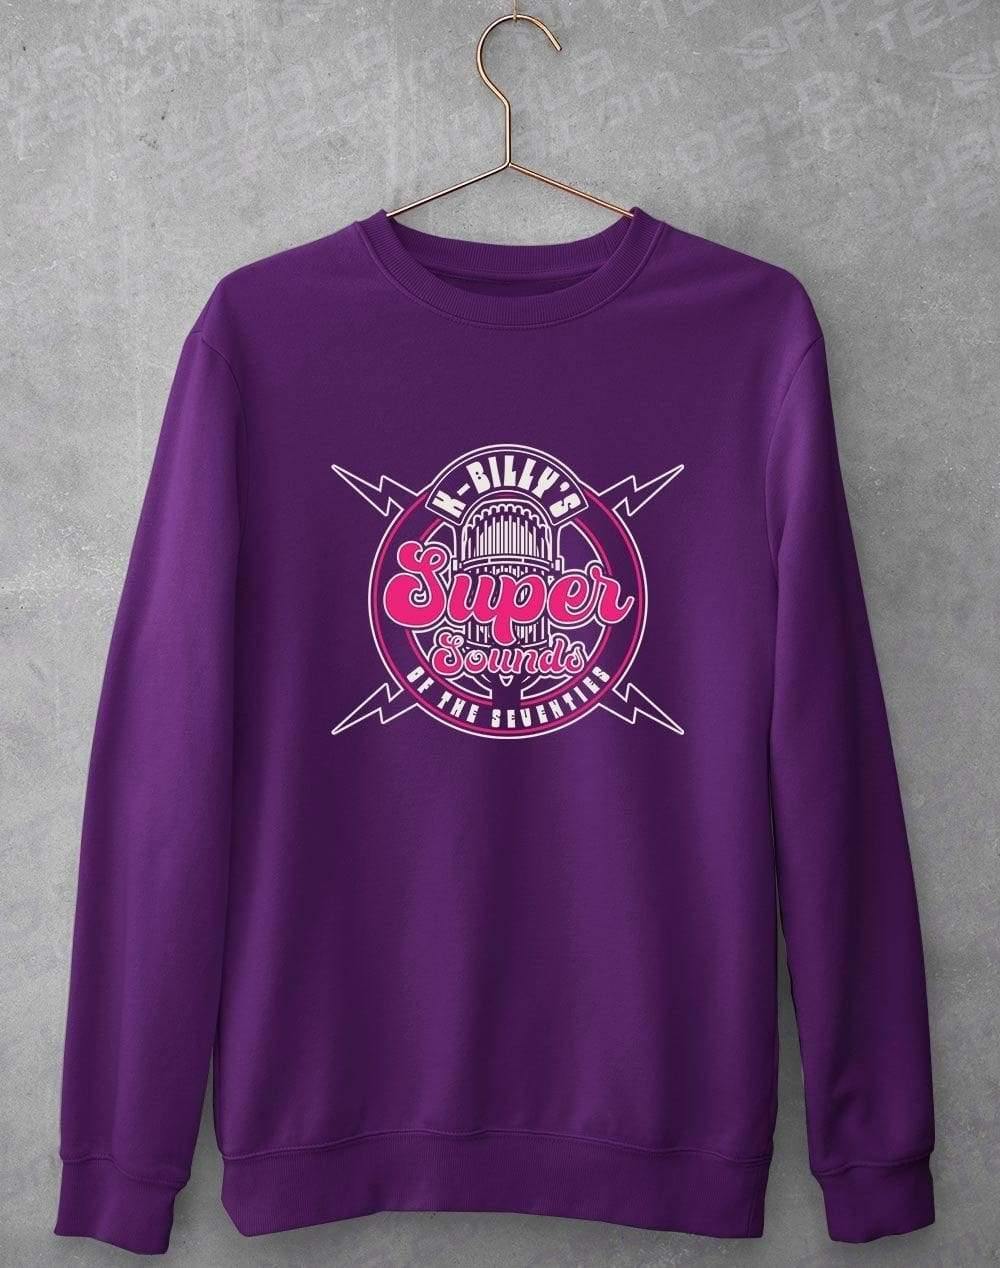 K Billys Super Sounds of the Seventies Sweatshirt S / Purple  - Off World Tees